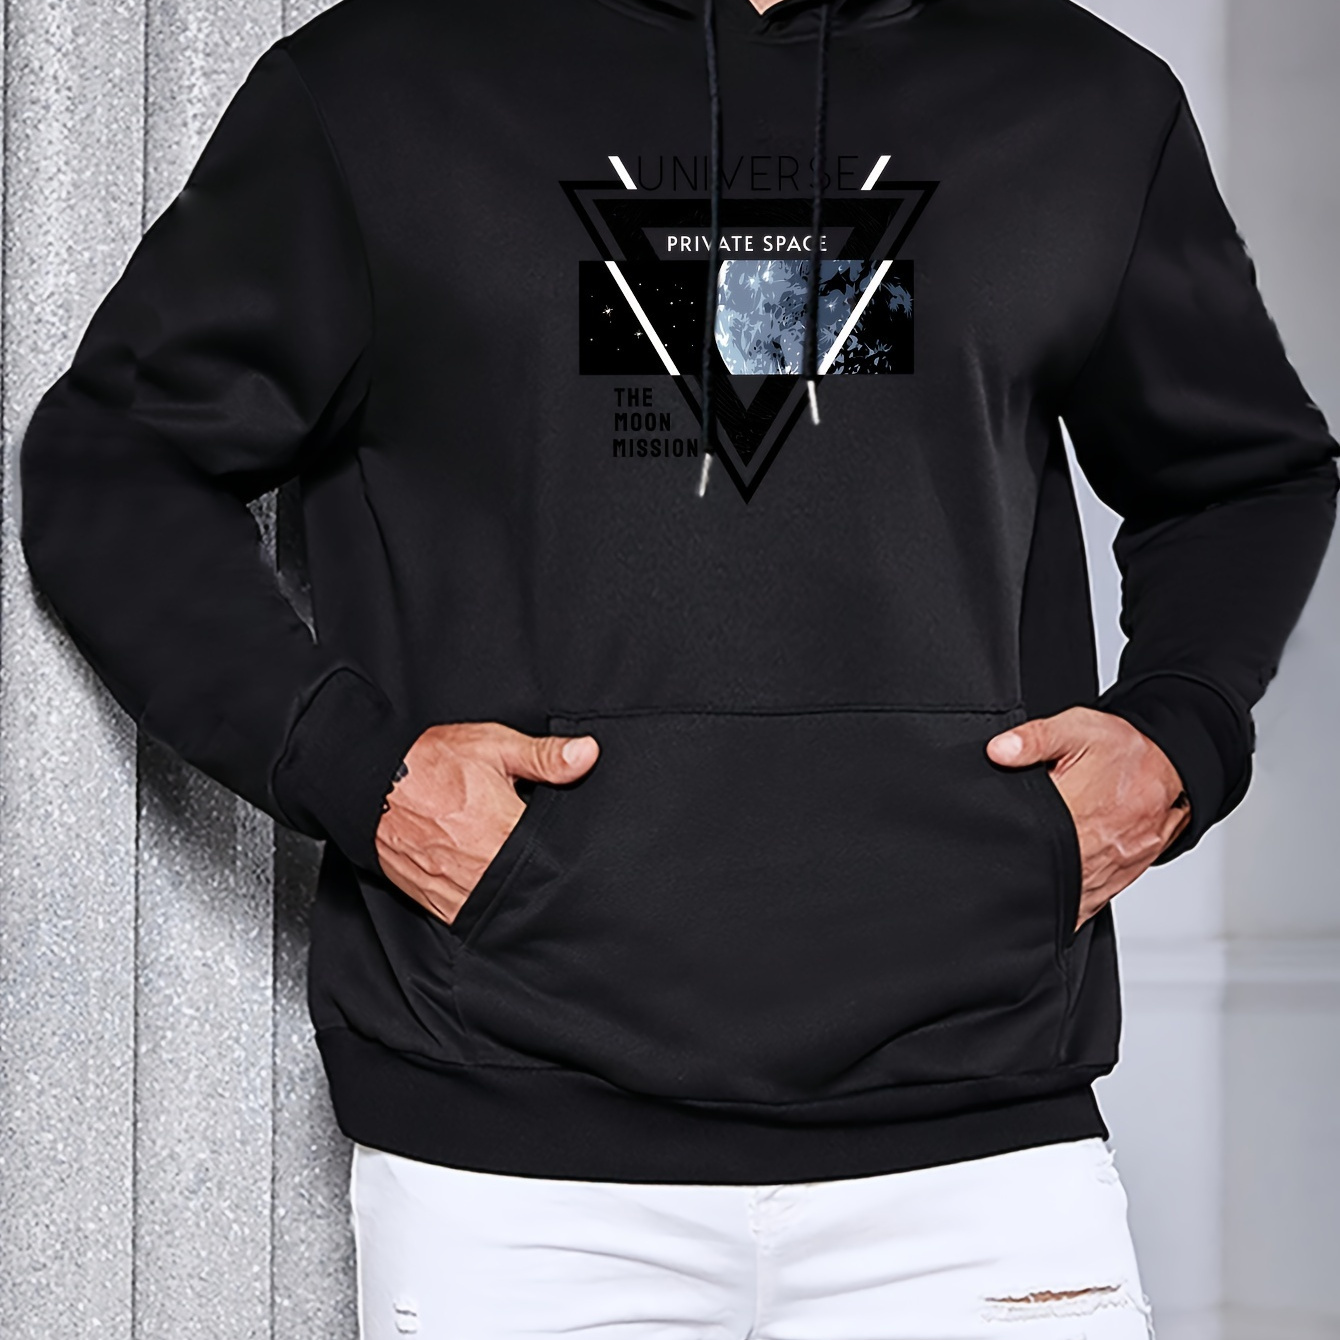 

Geometric Print Hooded Sweatshirt, Stylish Hoodies Fashion Casual Tops For Spring Autumn, Men's Clothing